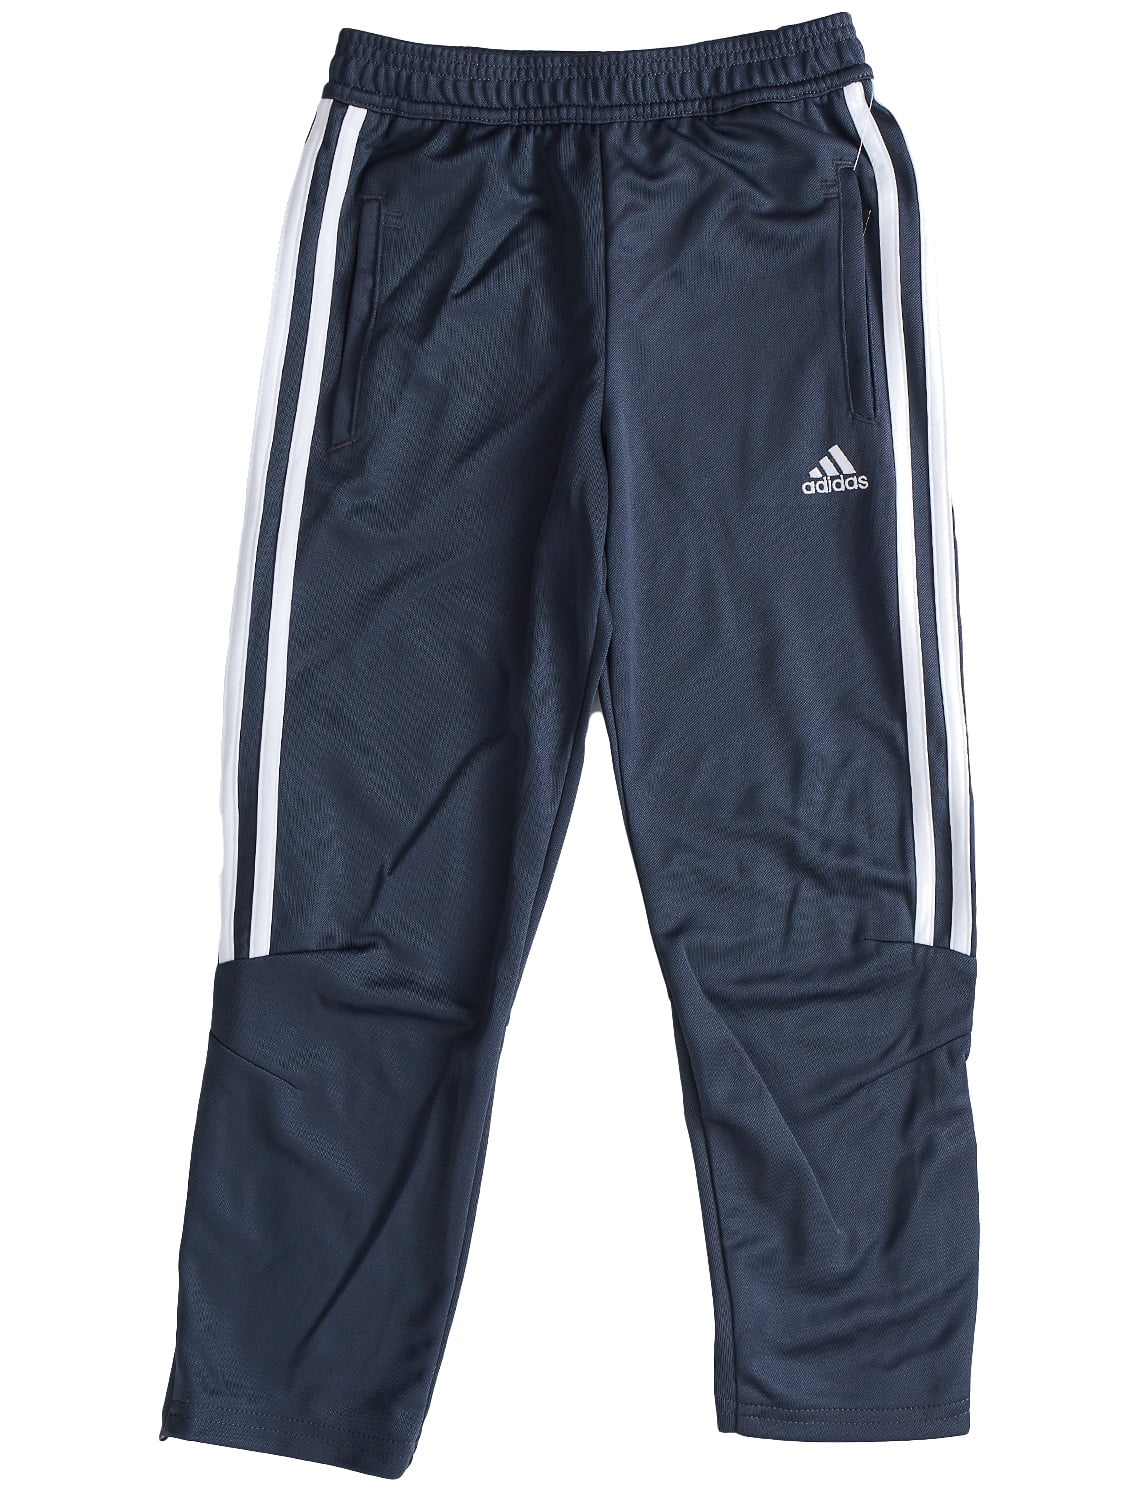 Adidas Boys' Tiro 17 Trackpants Athletic Soccer Pant - Kids - Walmart ...